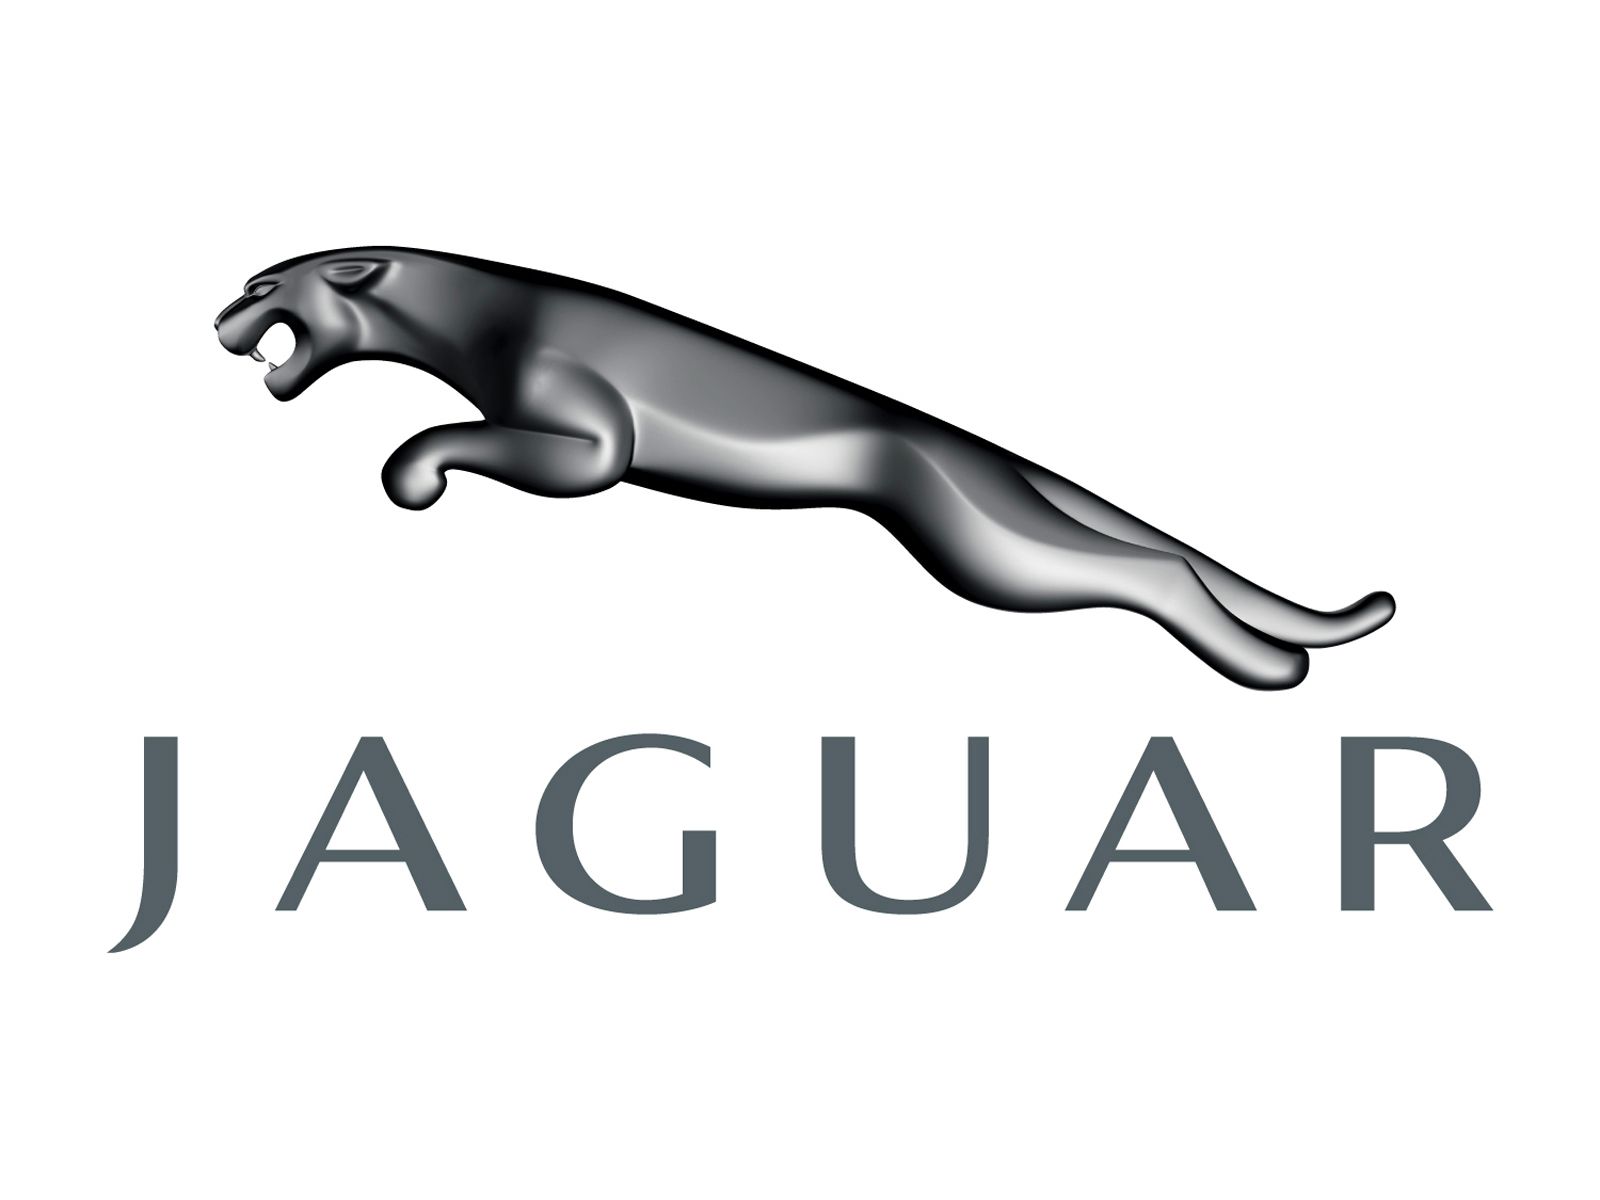 Jaguar Logo, Jaguar Car Symbol Meaning and History | Car Brand Names.com